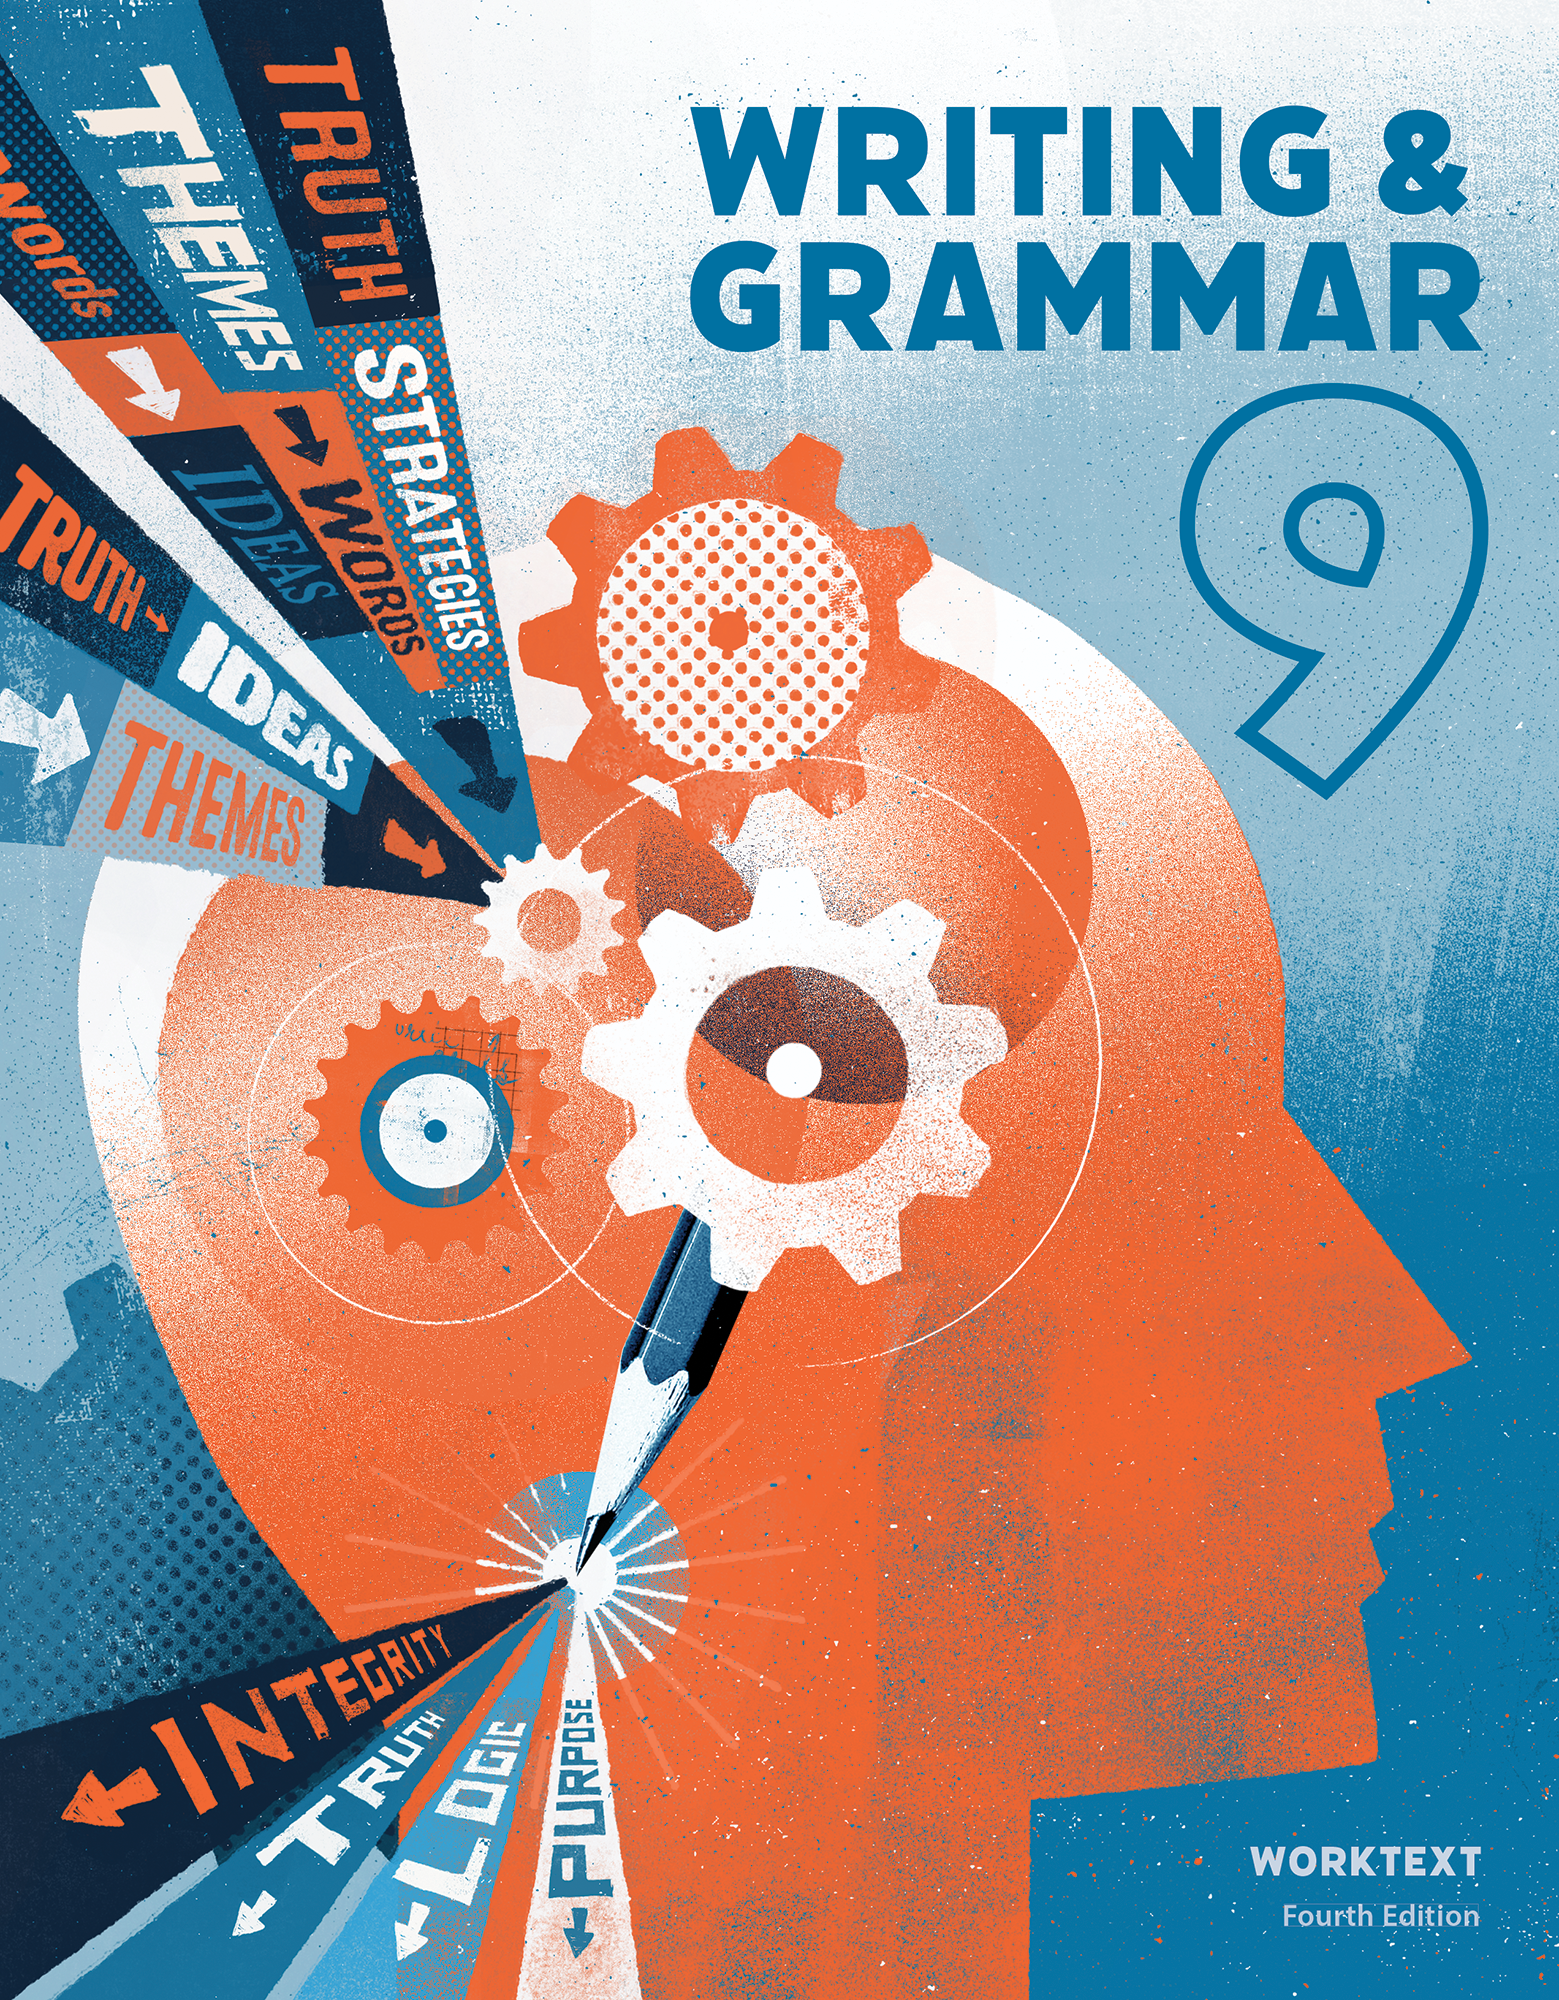 Writing & Grammar 9 Student Worktext, 4th ed.